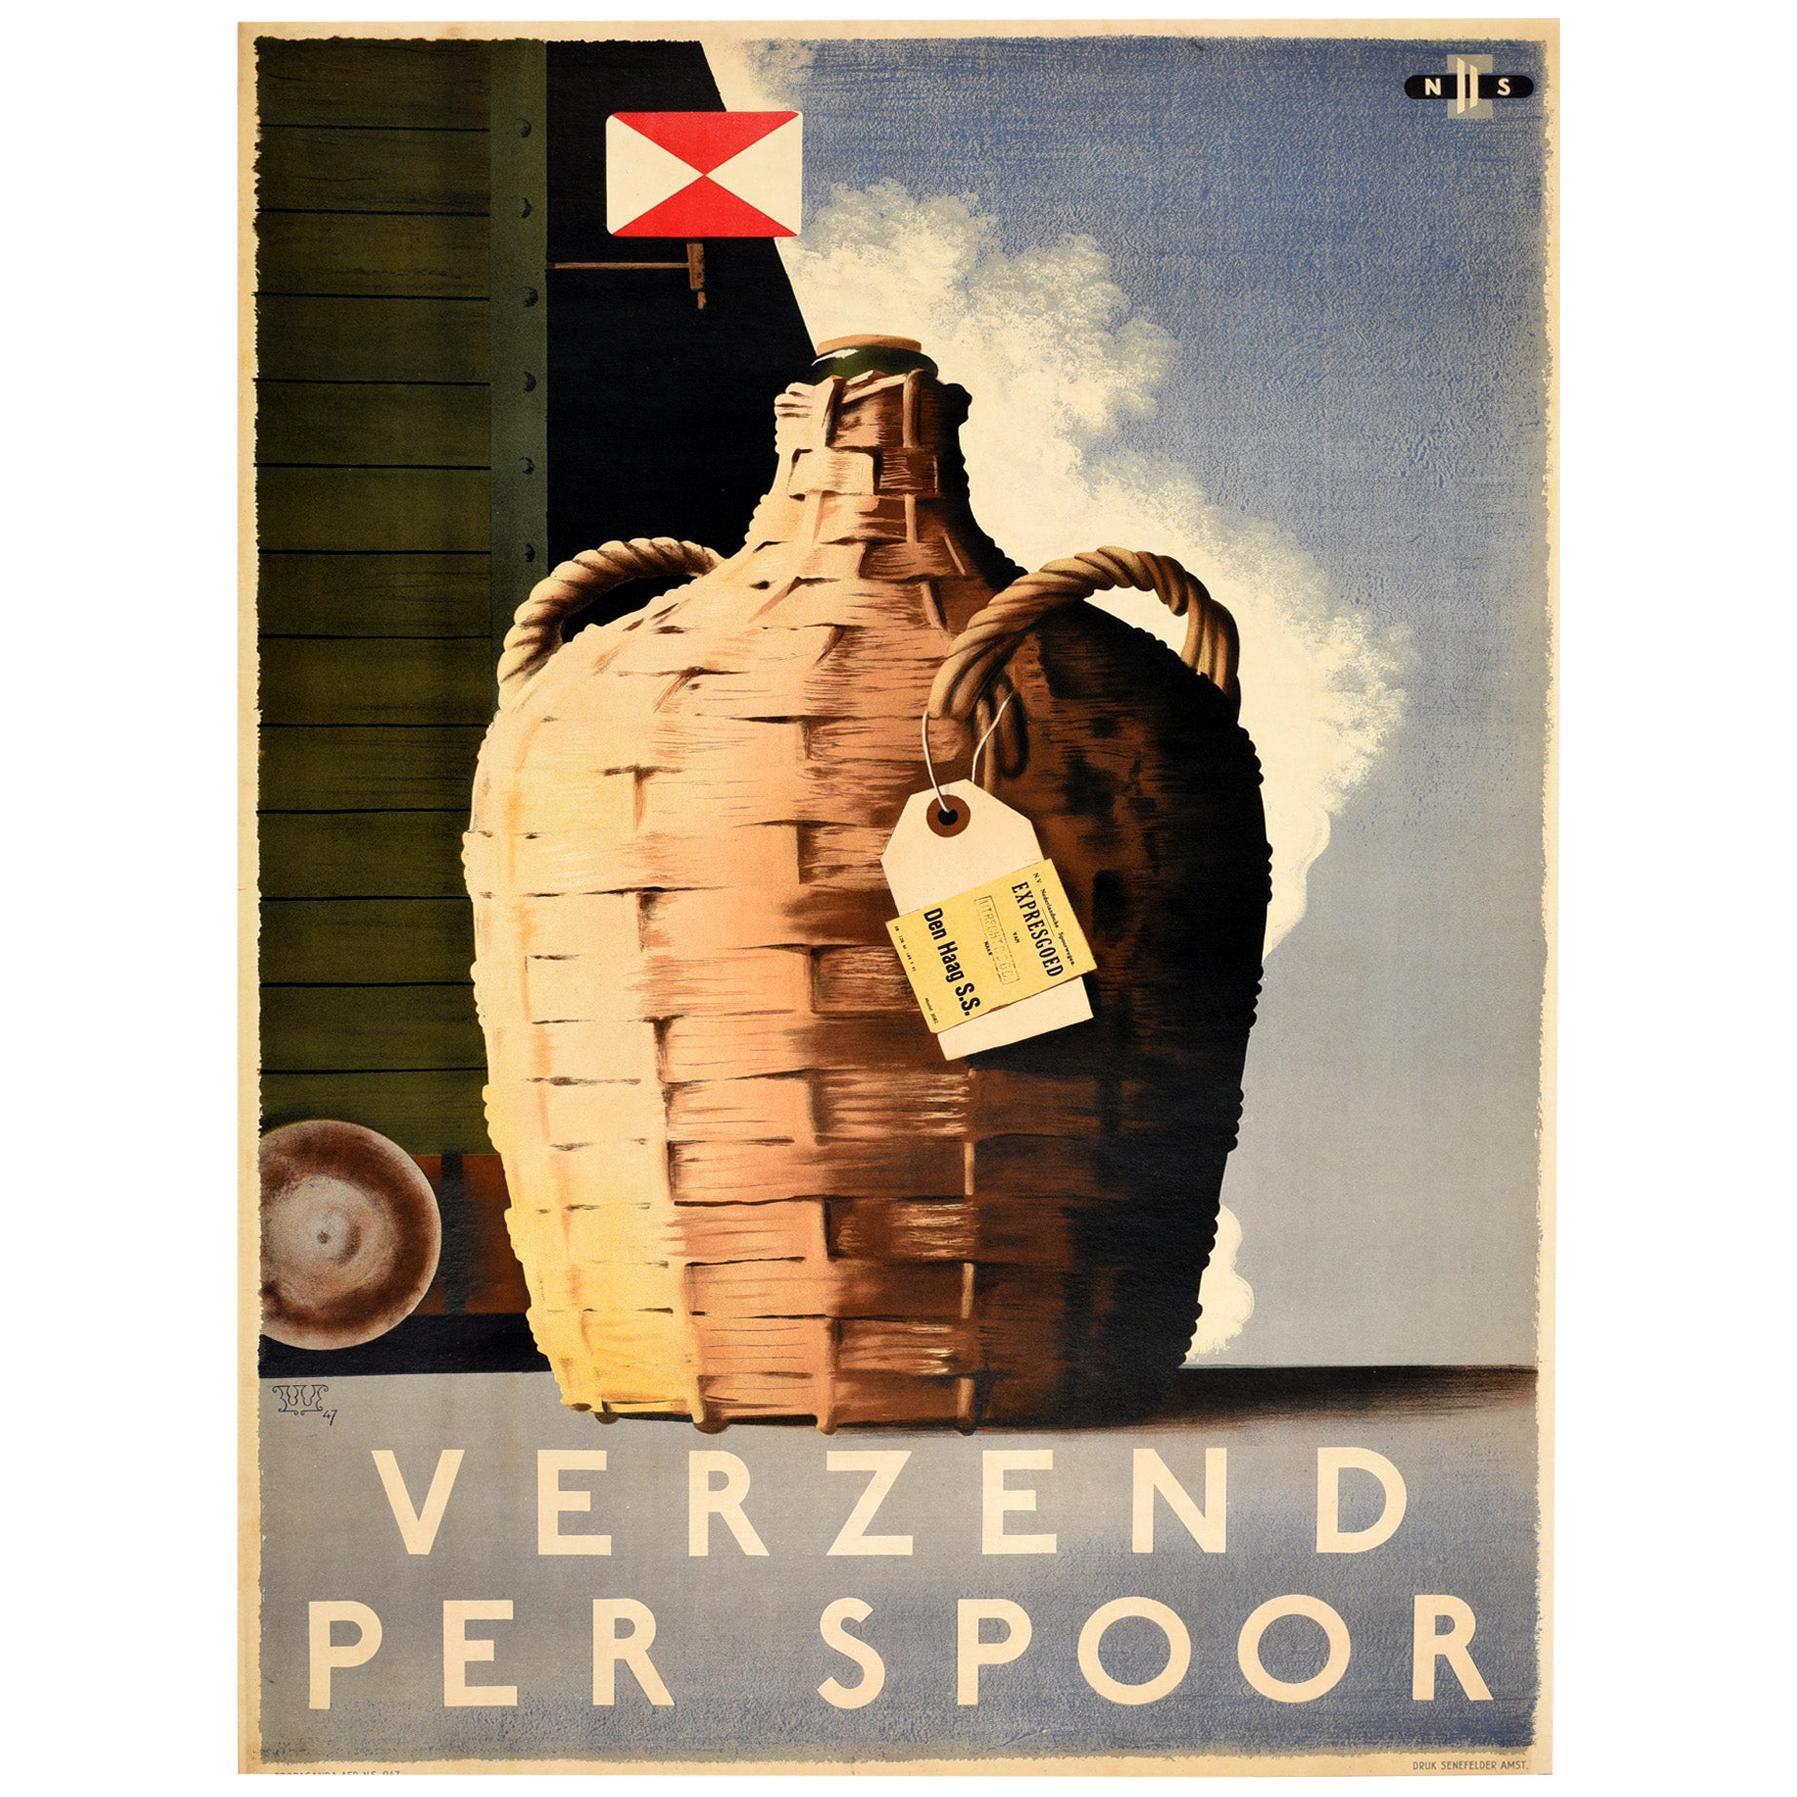 Original Vintage Poster Verzend Per Spoor Express Goods By Rail Wine Den Haag For Sale